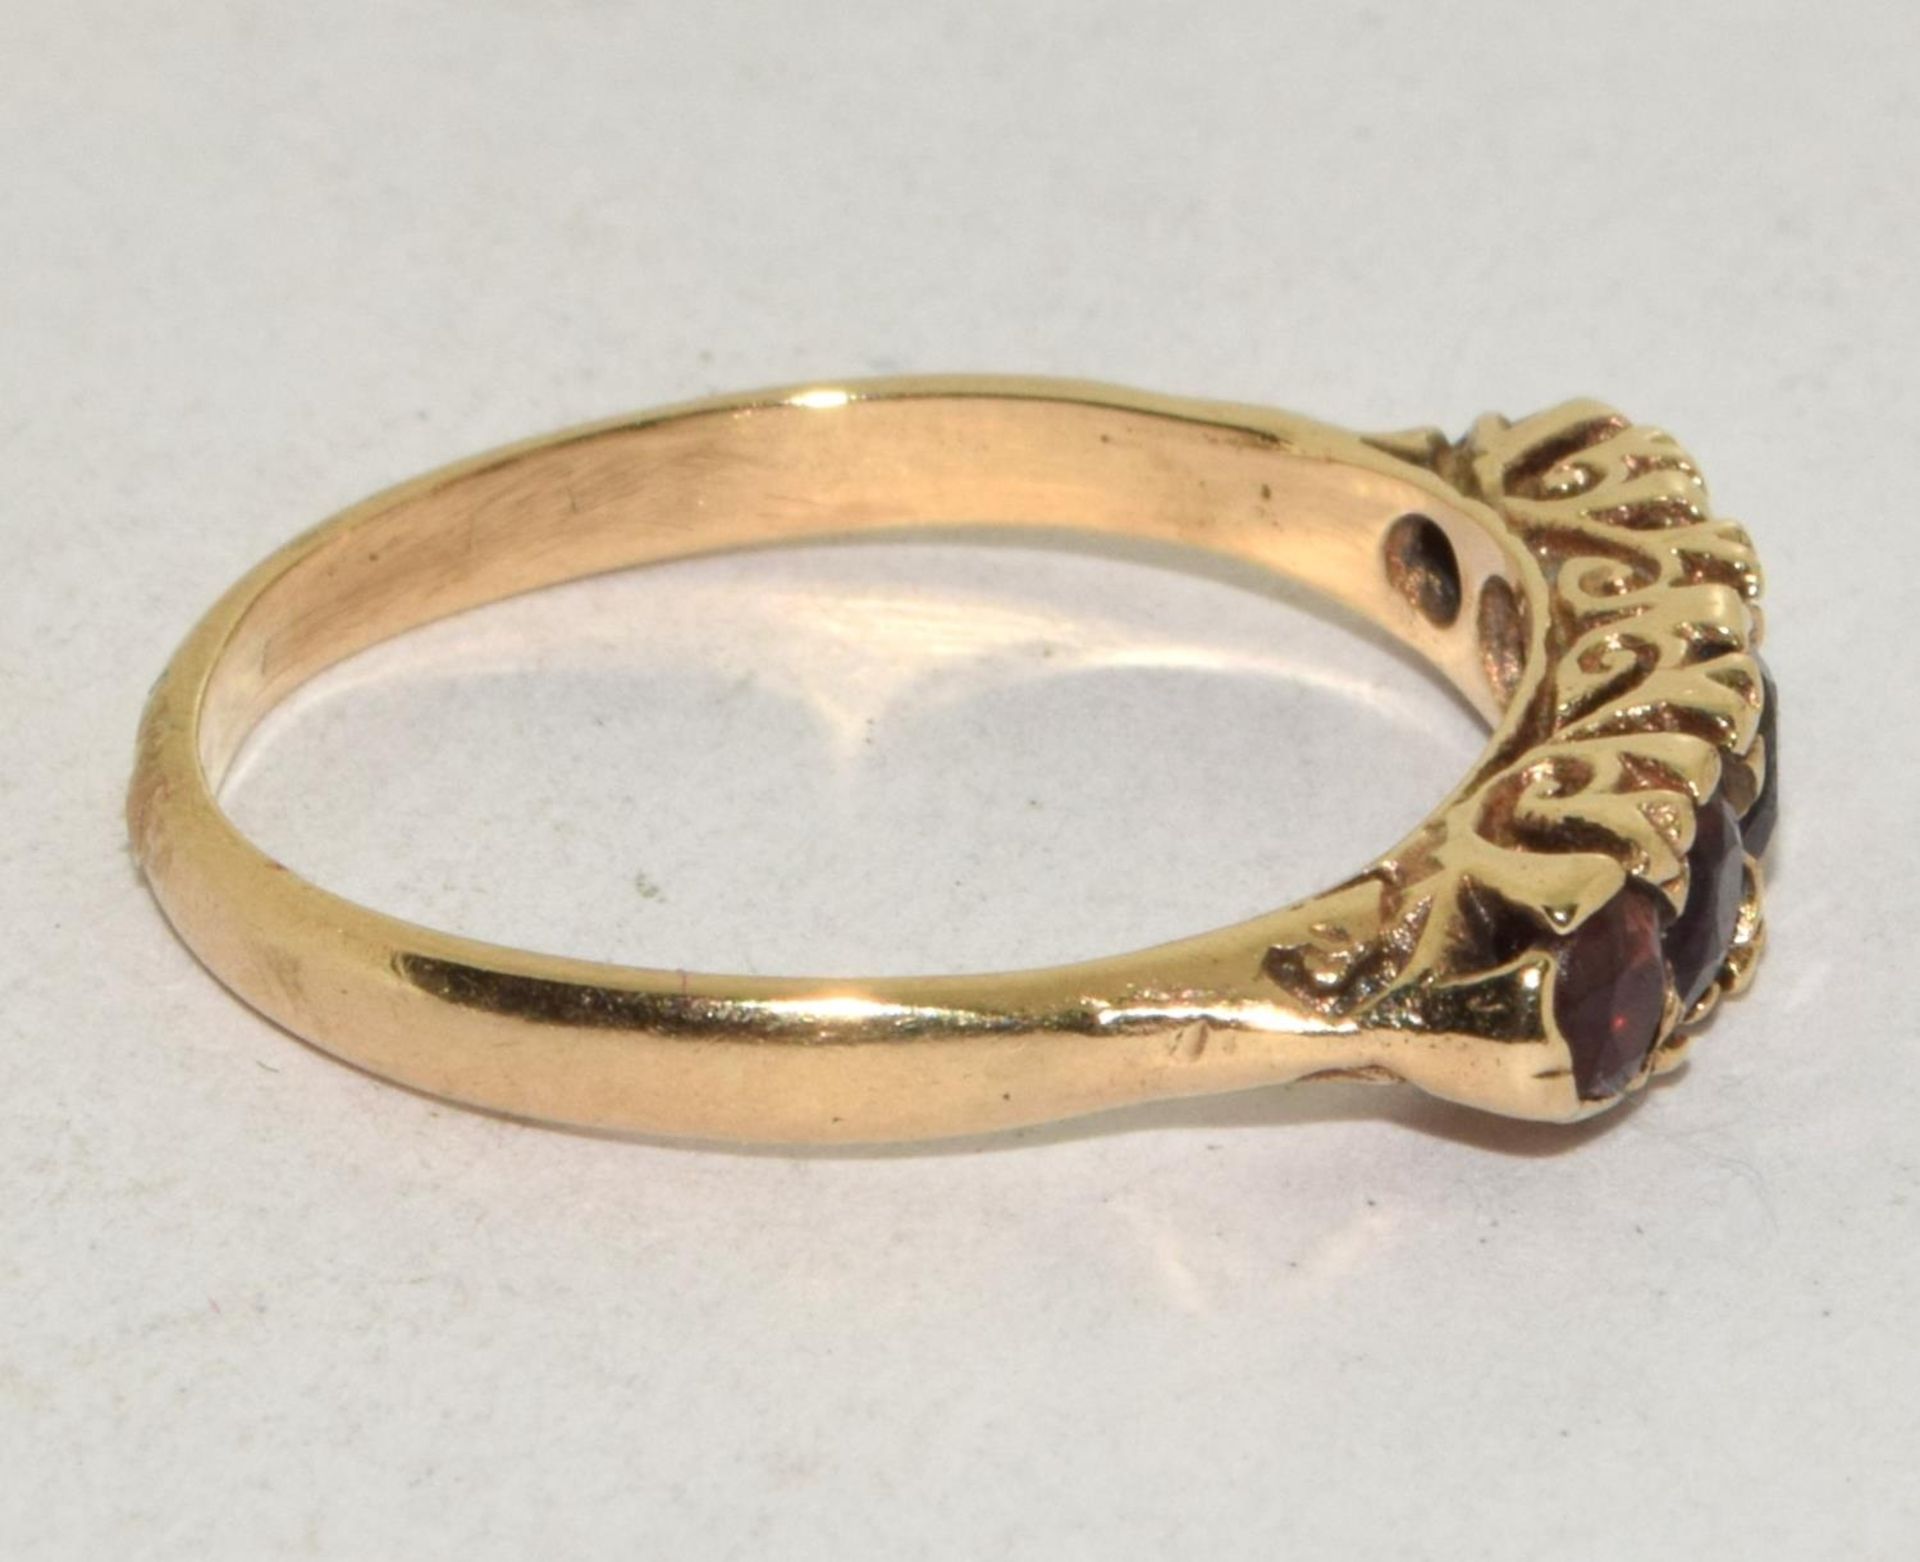 Vintage 9ct gold 5 stone Garnet ring 2.8g size Q - Image 4 of 5